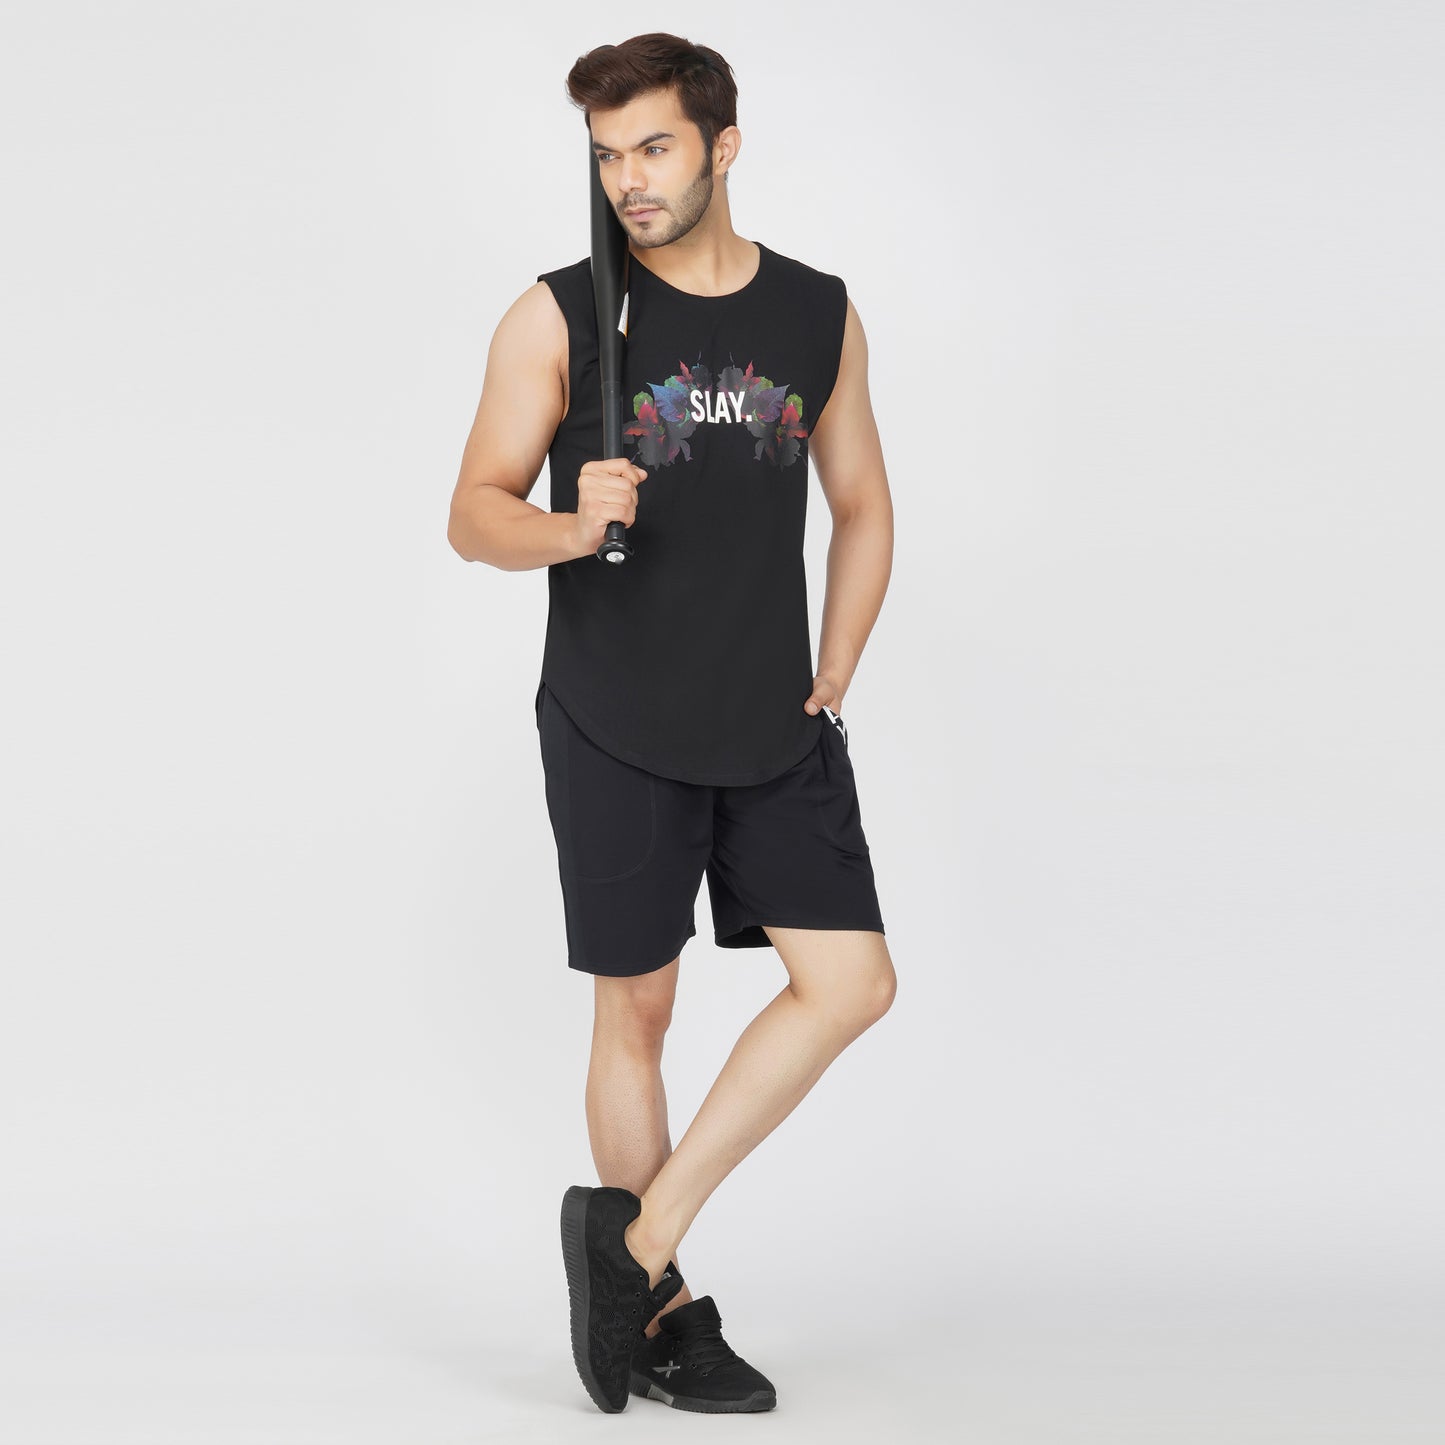 SLAY. Men's Black Shorts-clothing-to-slay.myshopify.com-Men's Shorts